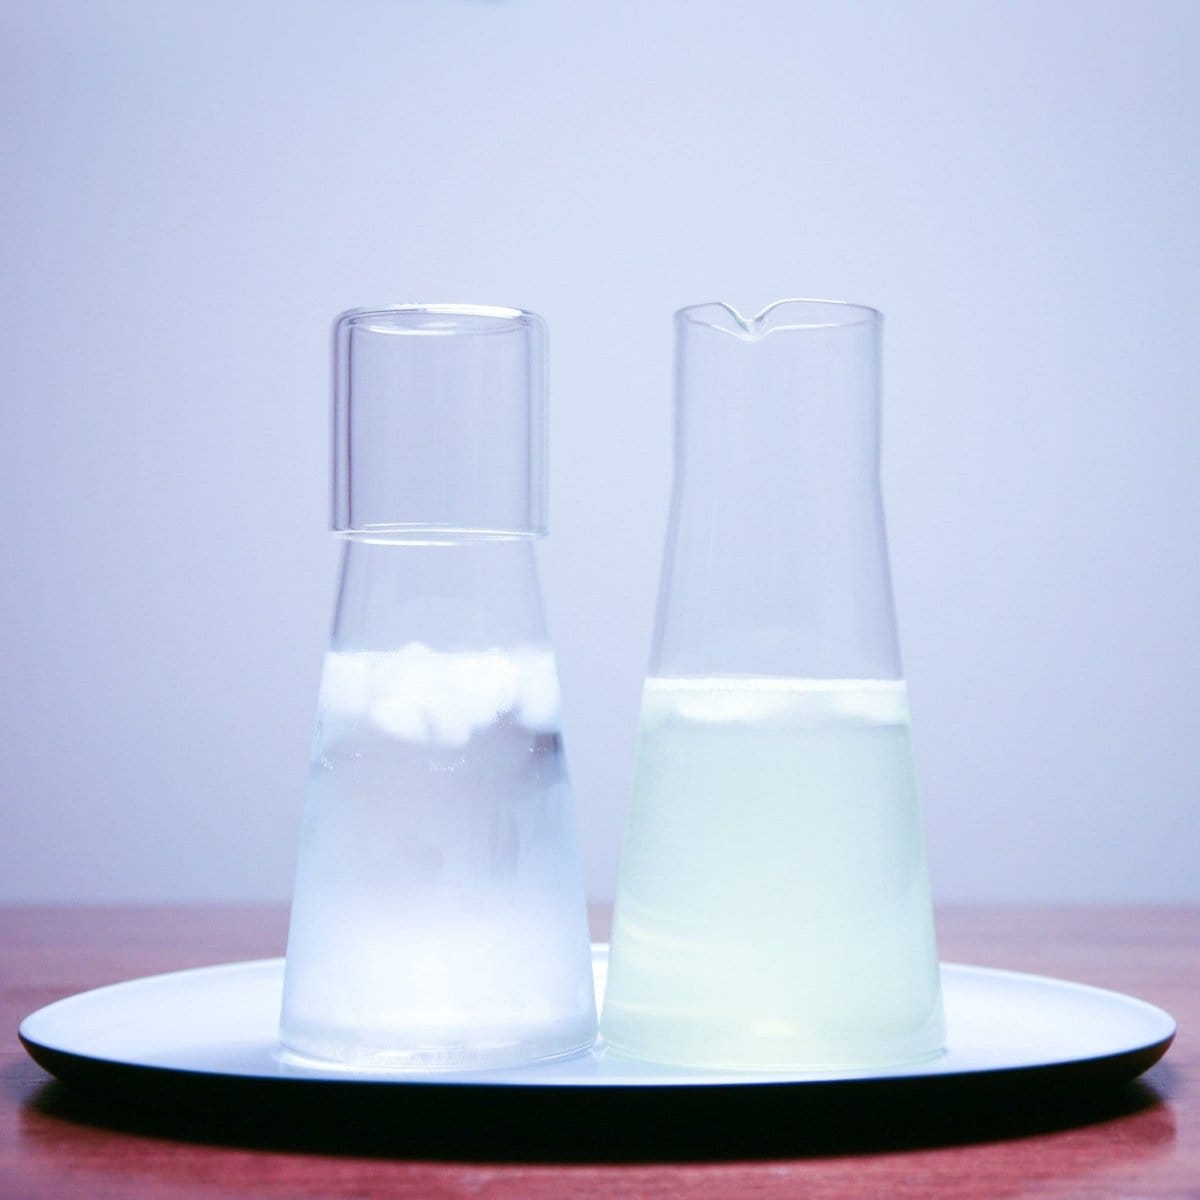 Ørskov - Glass Carafe W. Glass - Kitchenware - DANSKmadeforrooms